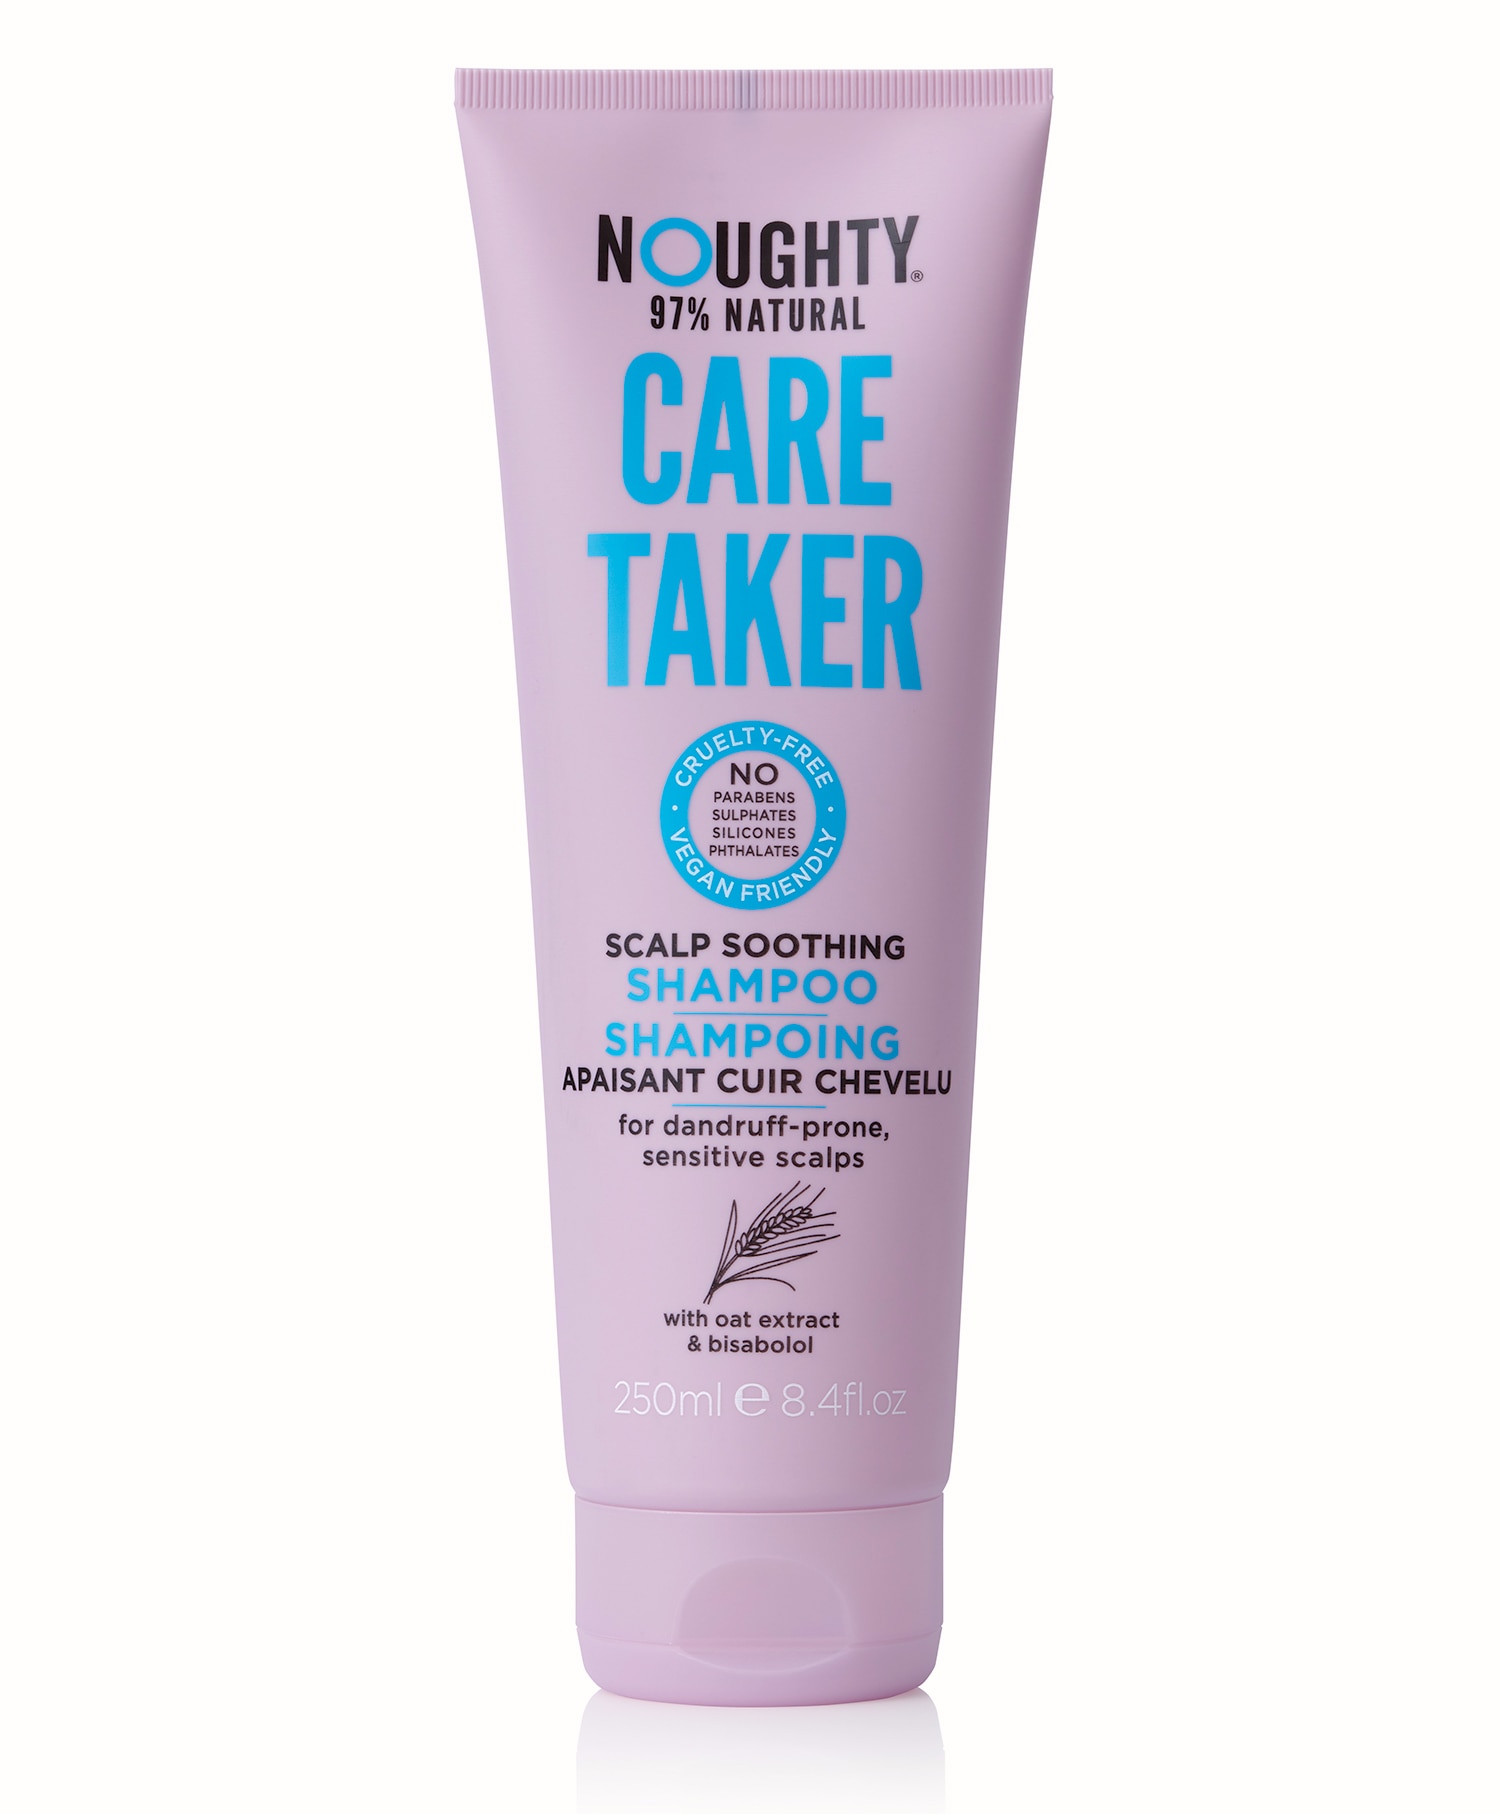 Noughty Care Taker Shampoo